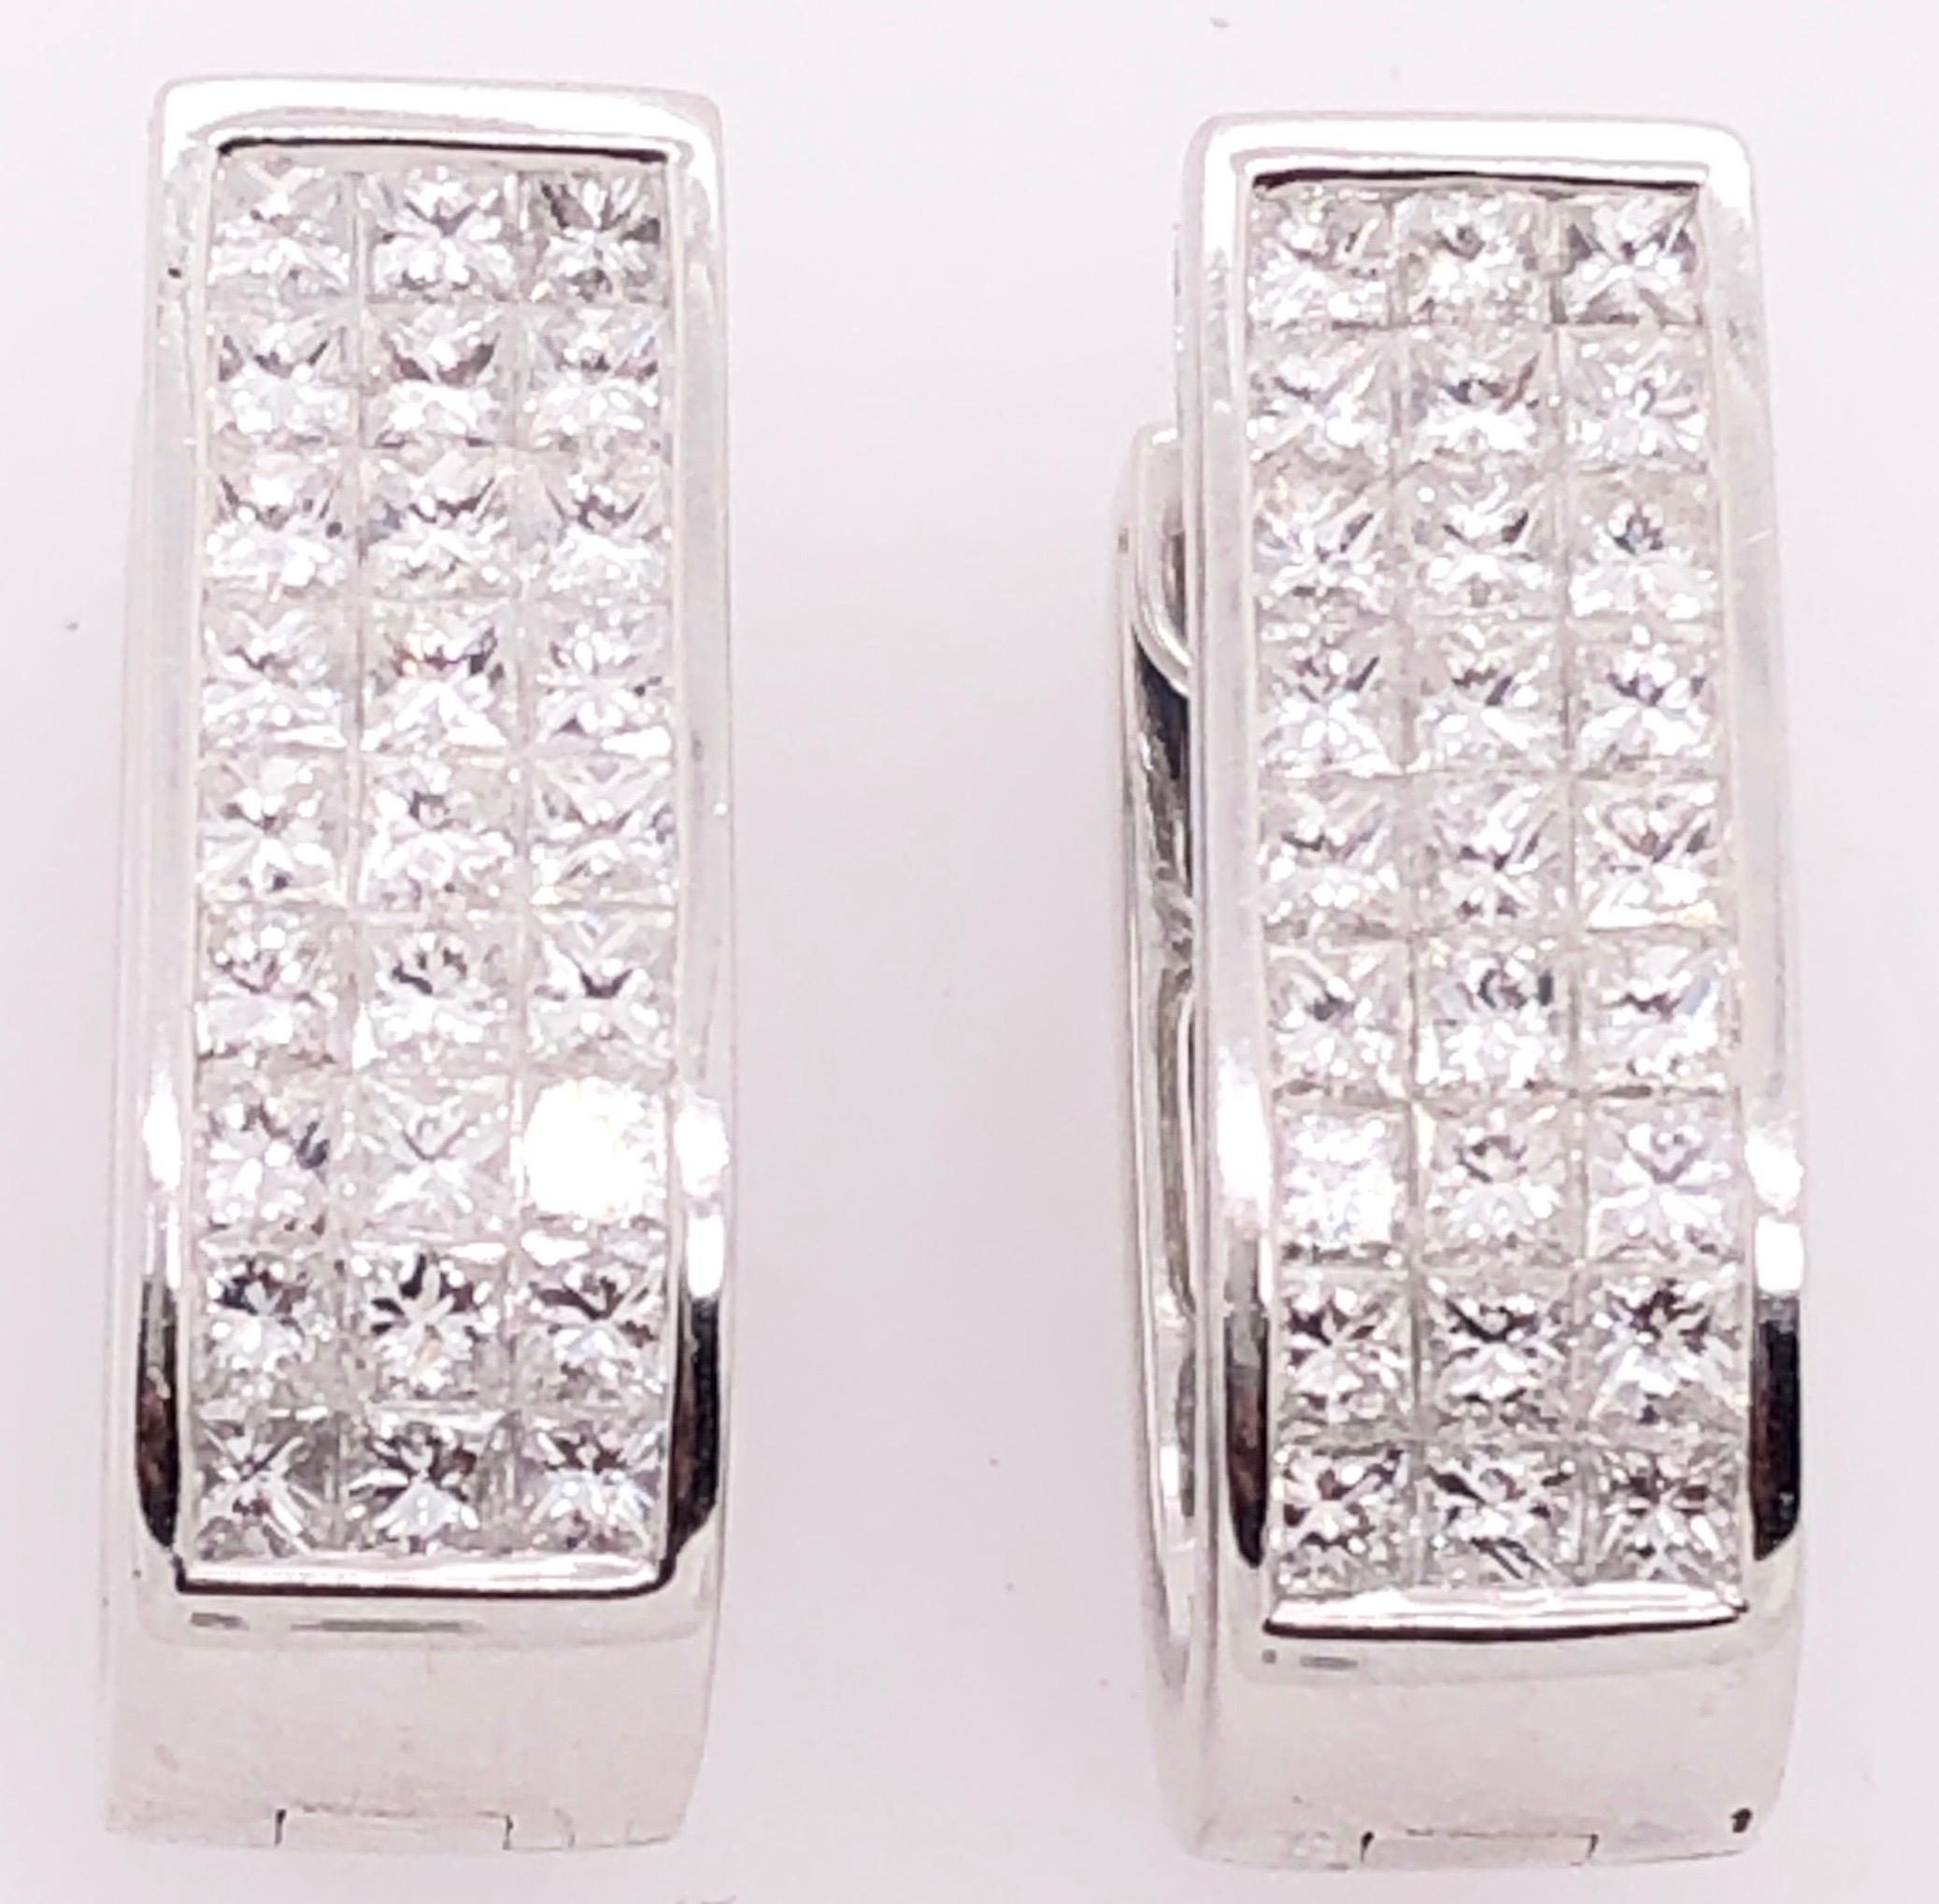 14 Karat White Gold Diamond And Sapphire Reversible Hoop Earrings
1.50 total diamond weight.
5.1 grams total weight.